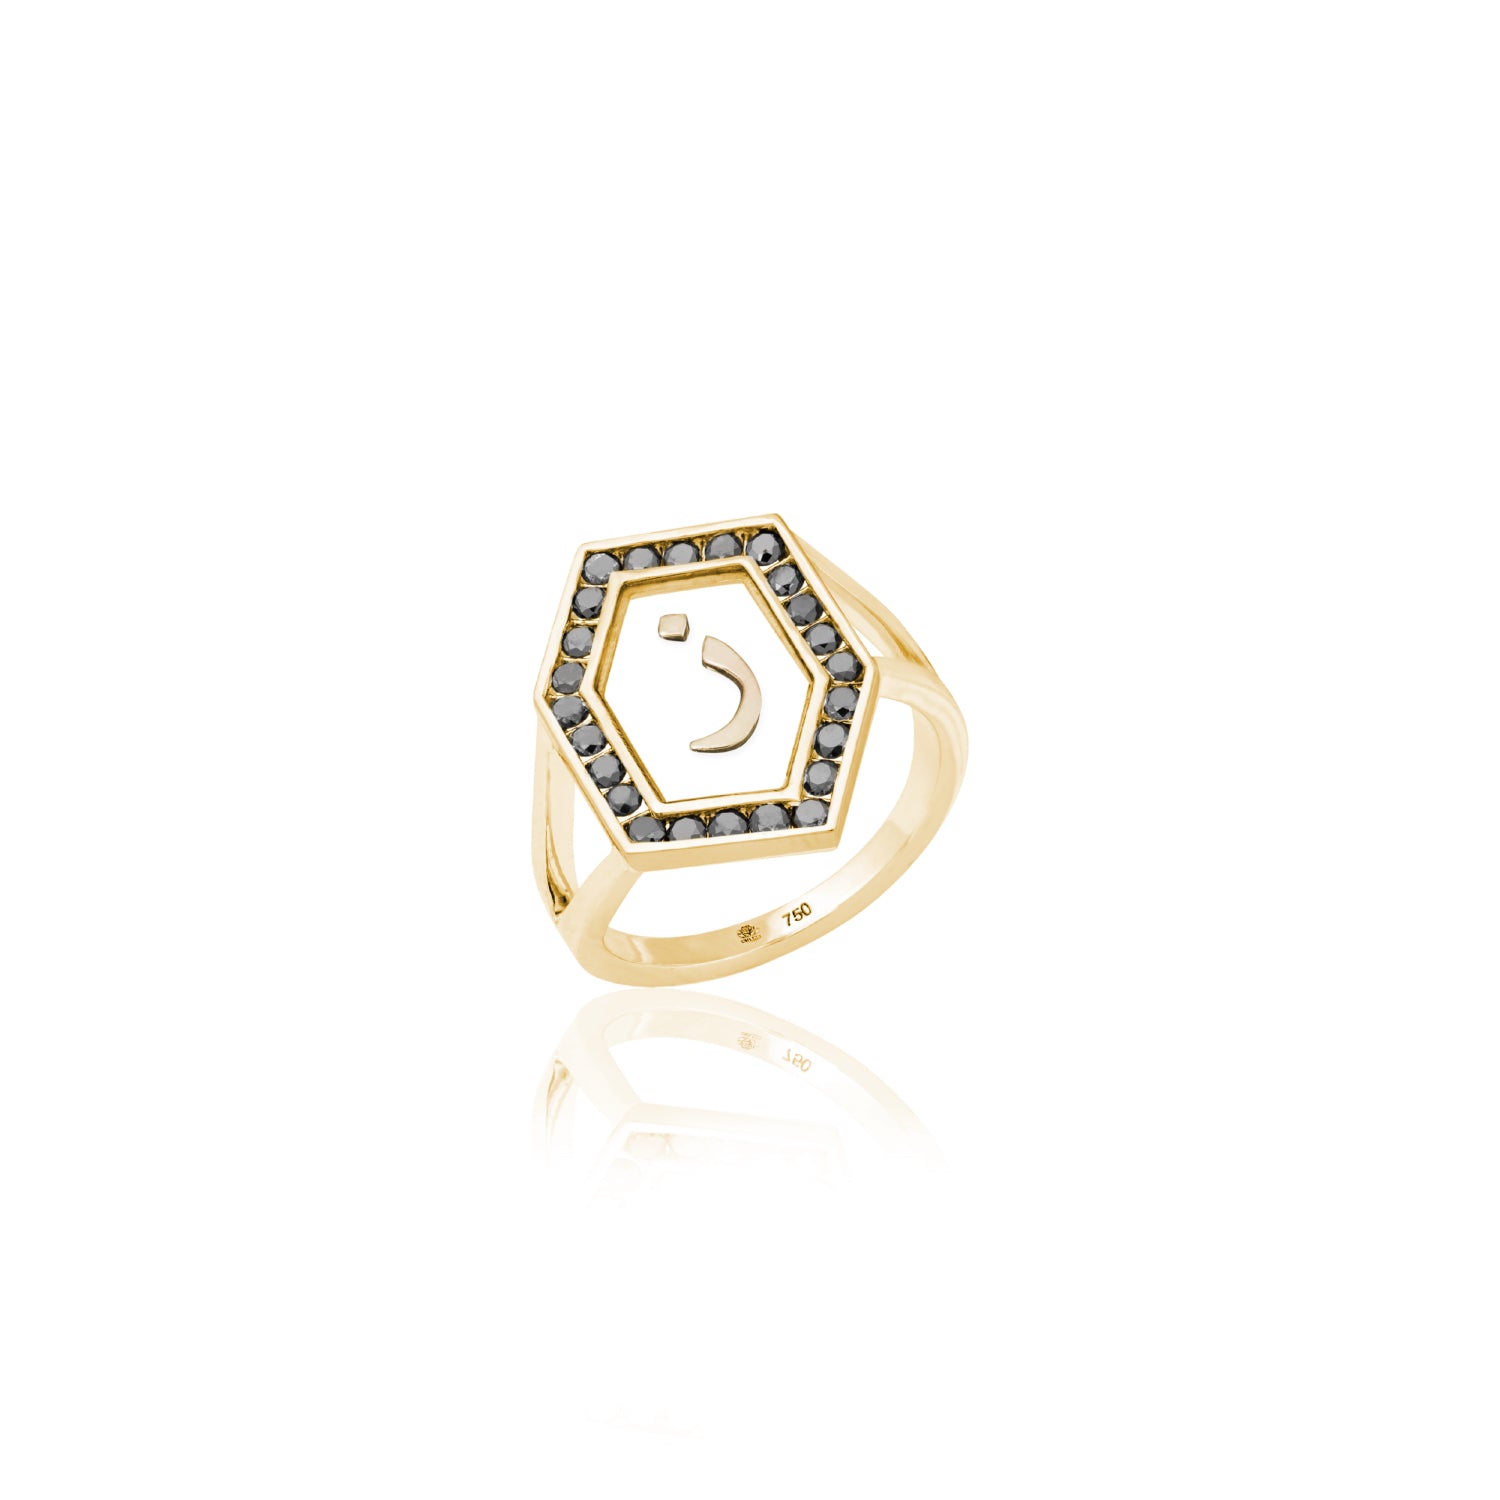 Qamoos 1.0 Letter ز Black Diamond Ring in Yellow Gold